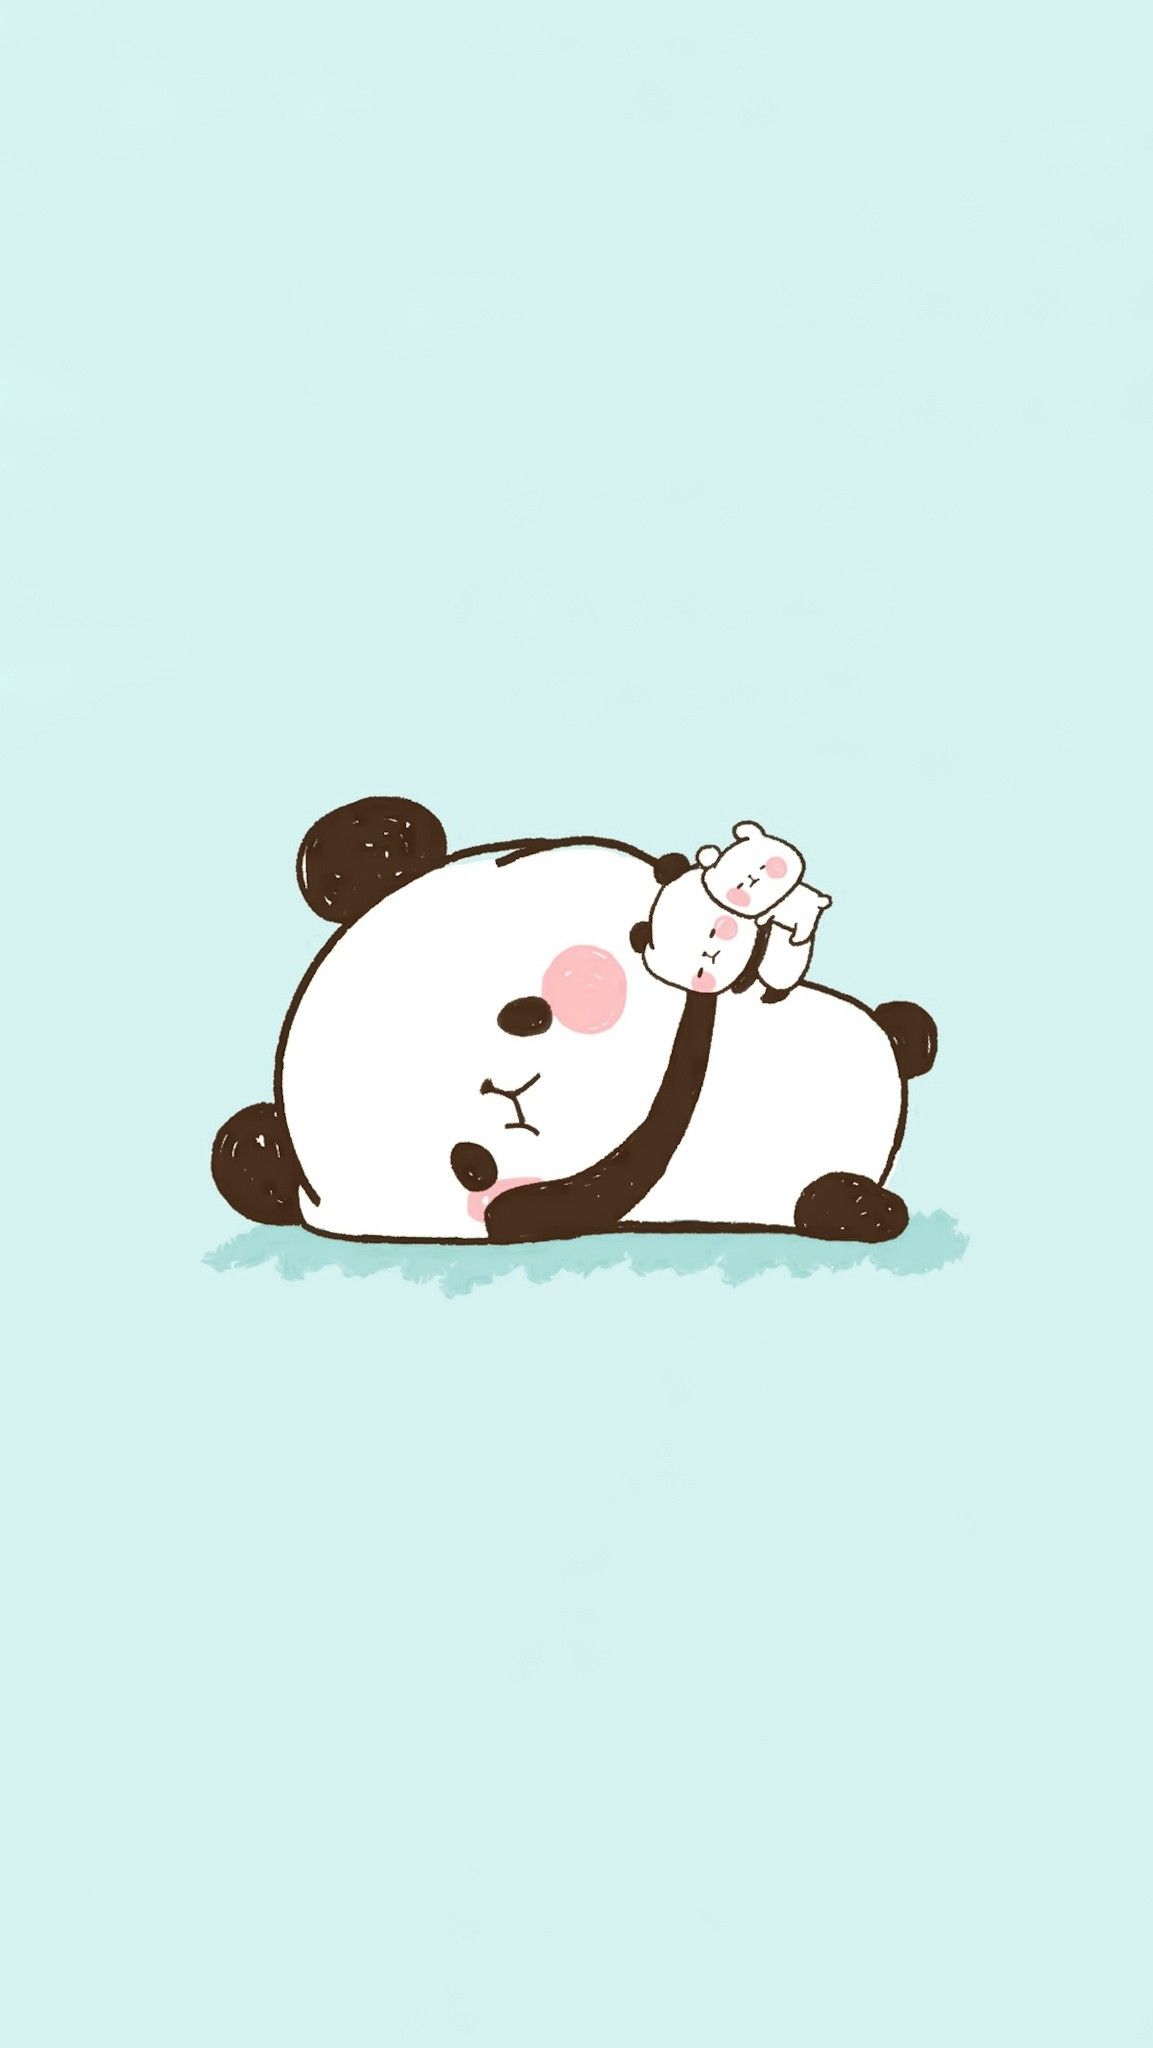 About Cute Kawaii Panda Wallpaper Google Play version   Apptopia